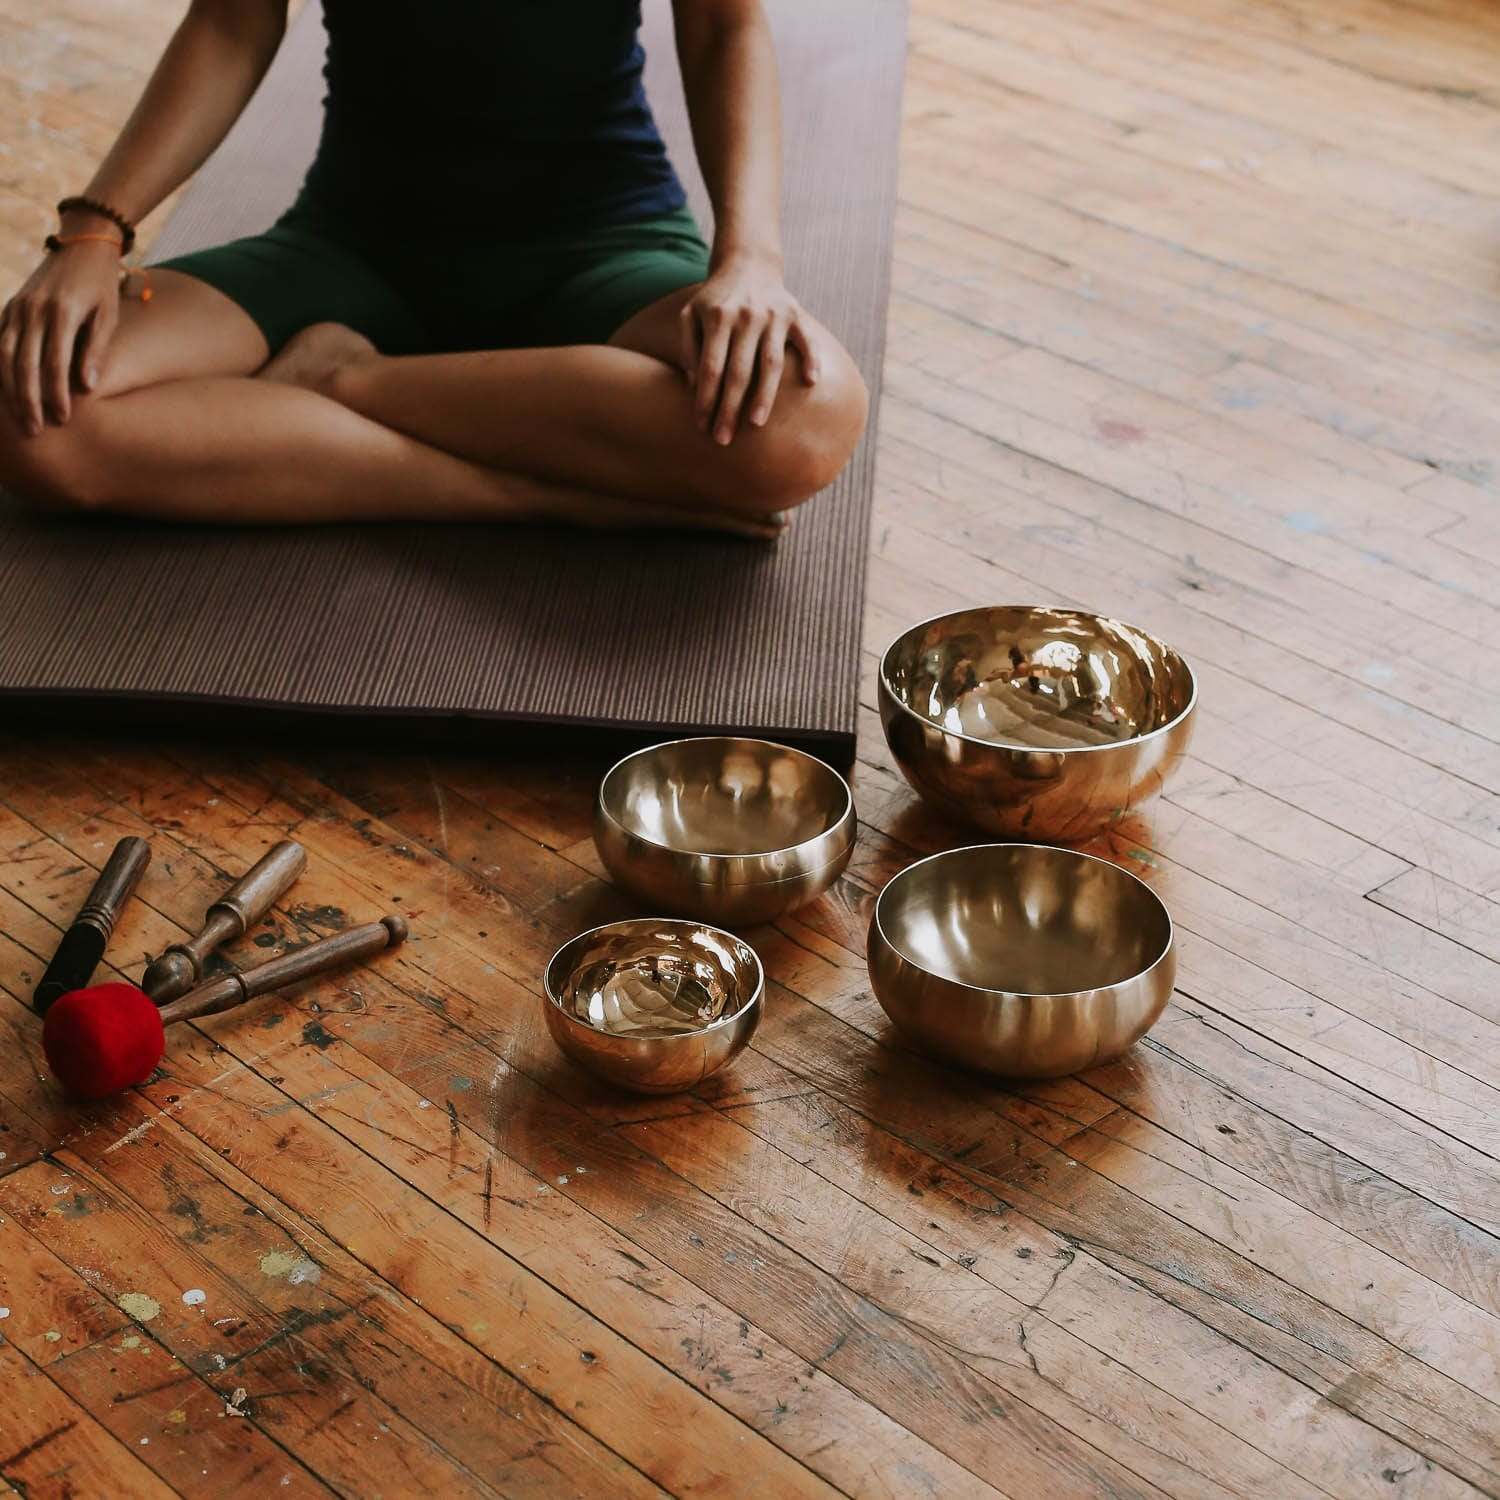 Tibetan Singing Bowls for Meditation